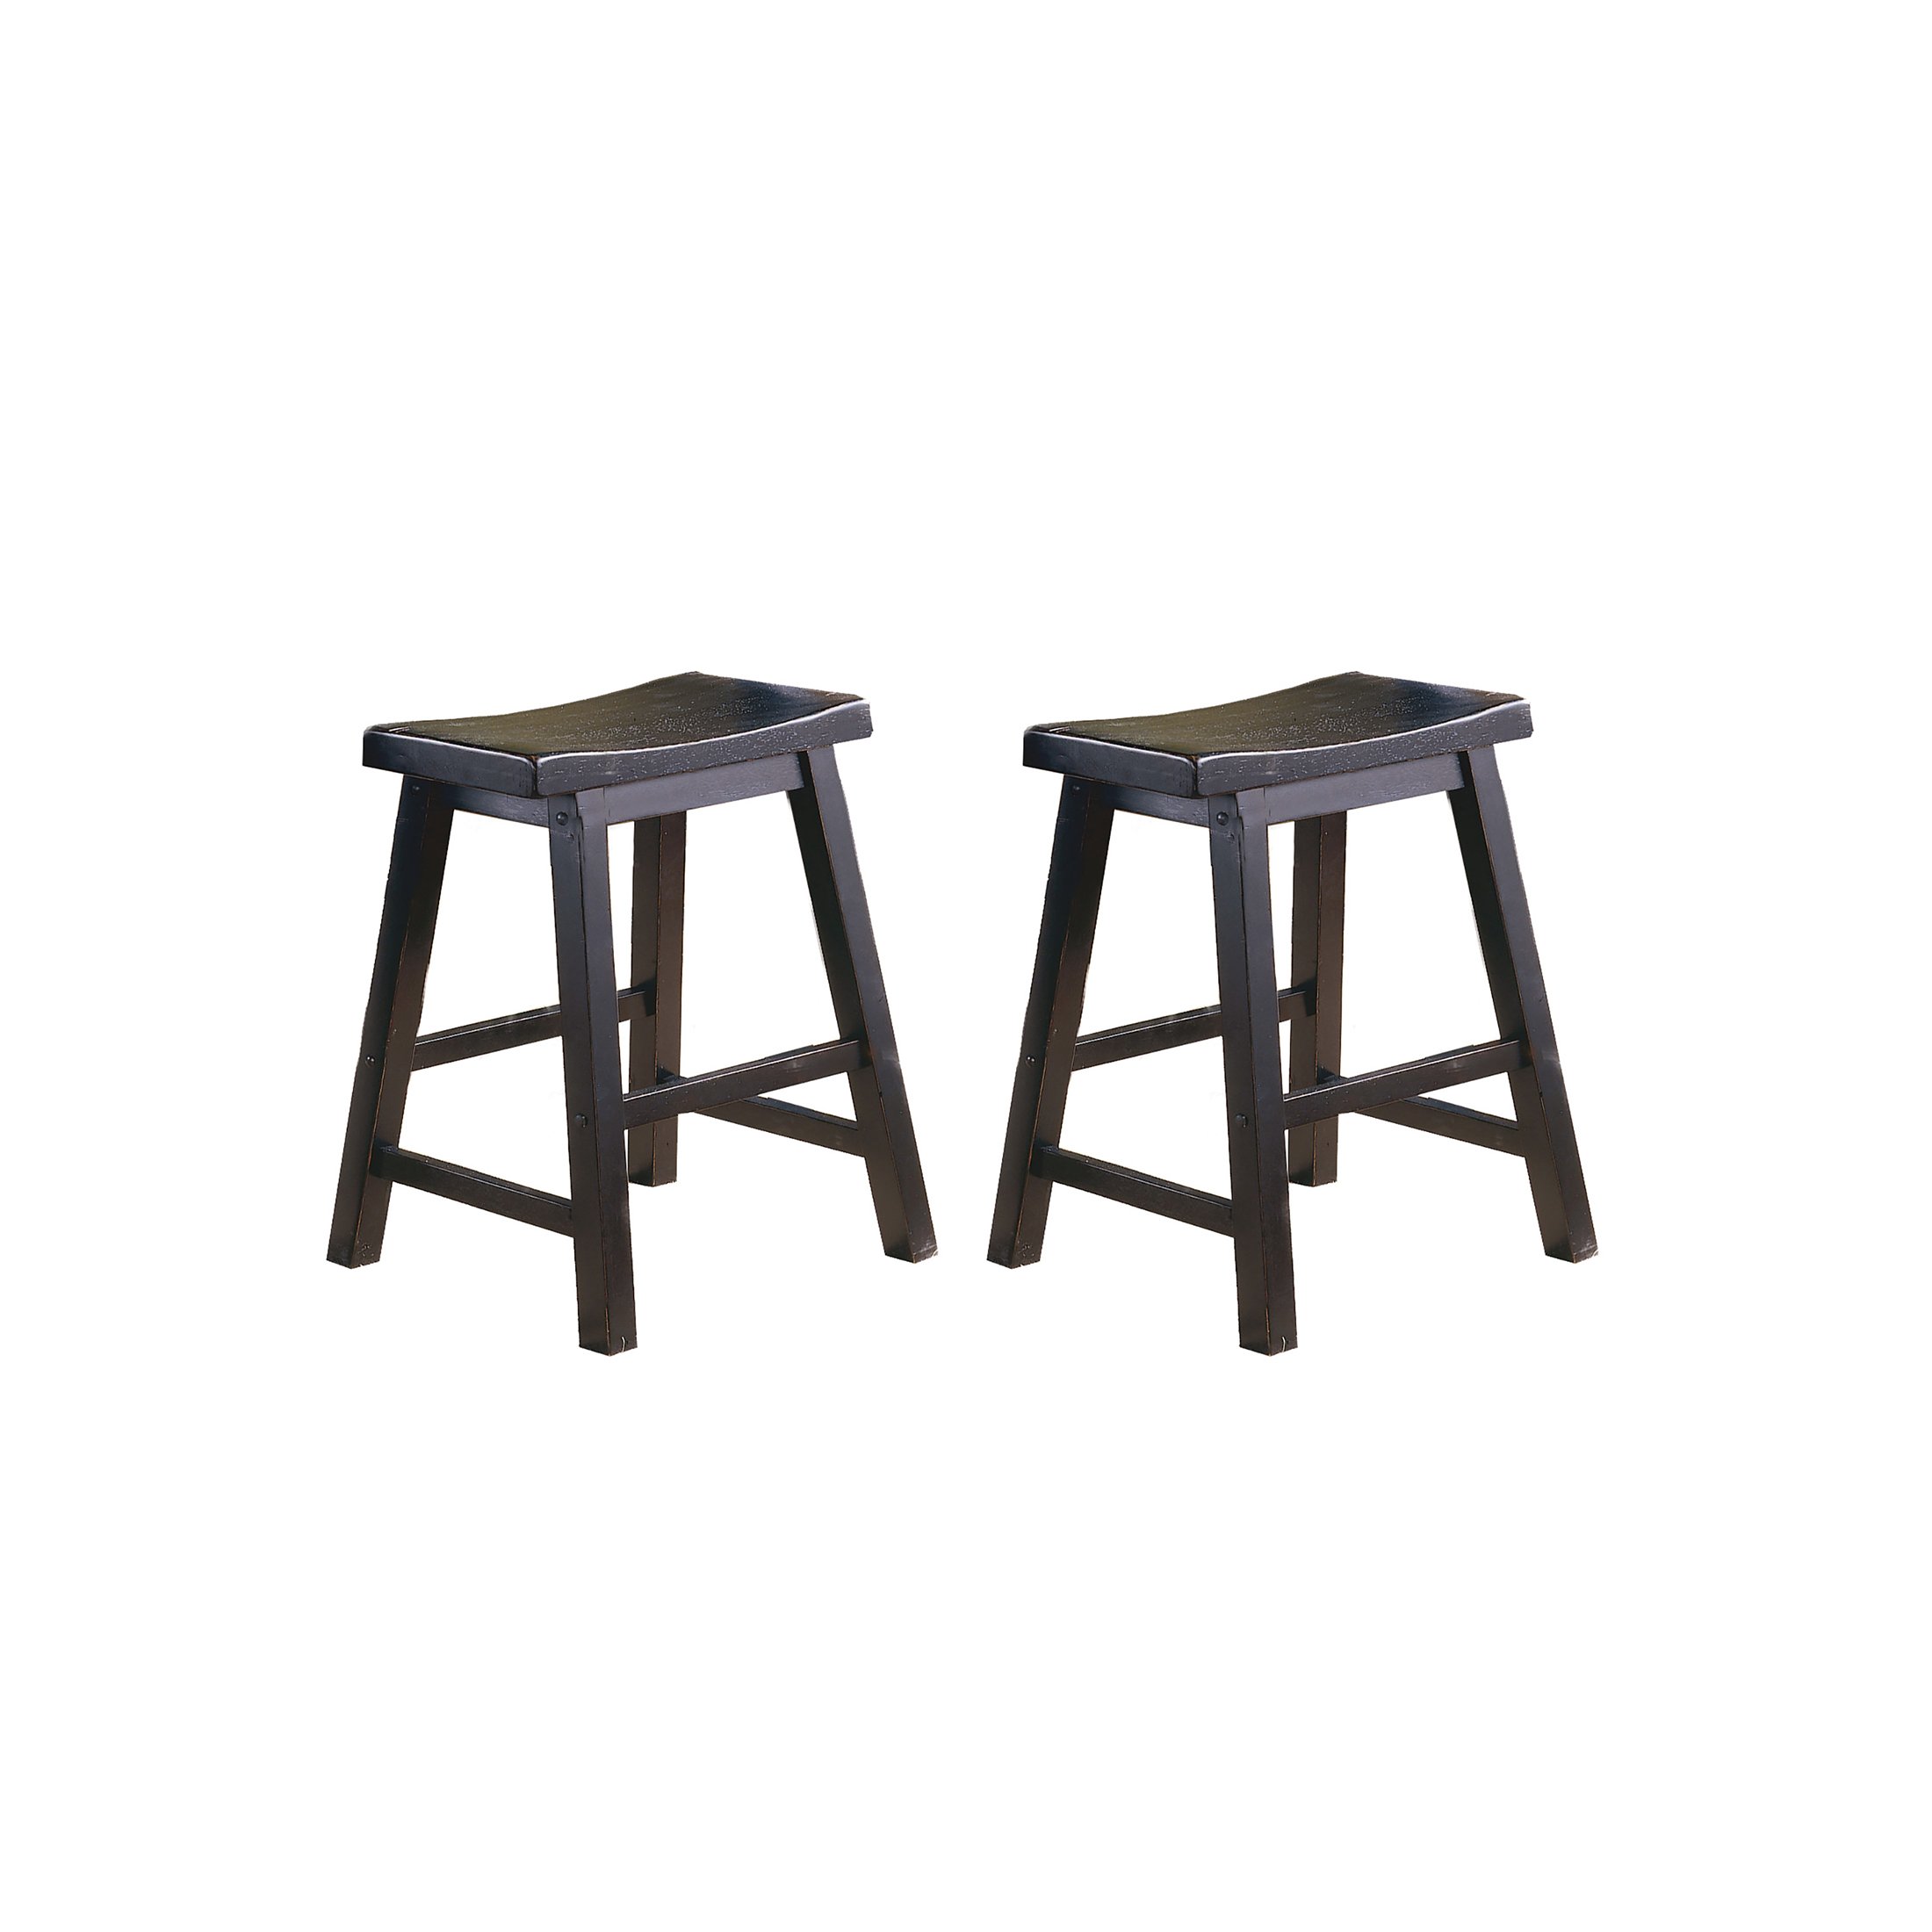 OakvillePark Gering Wood Saddle Seat Dining Height Stool (Set of 2), 18", Black - image 1 of 3